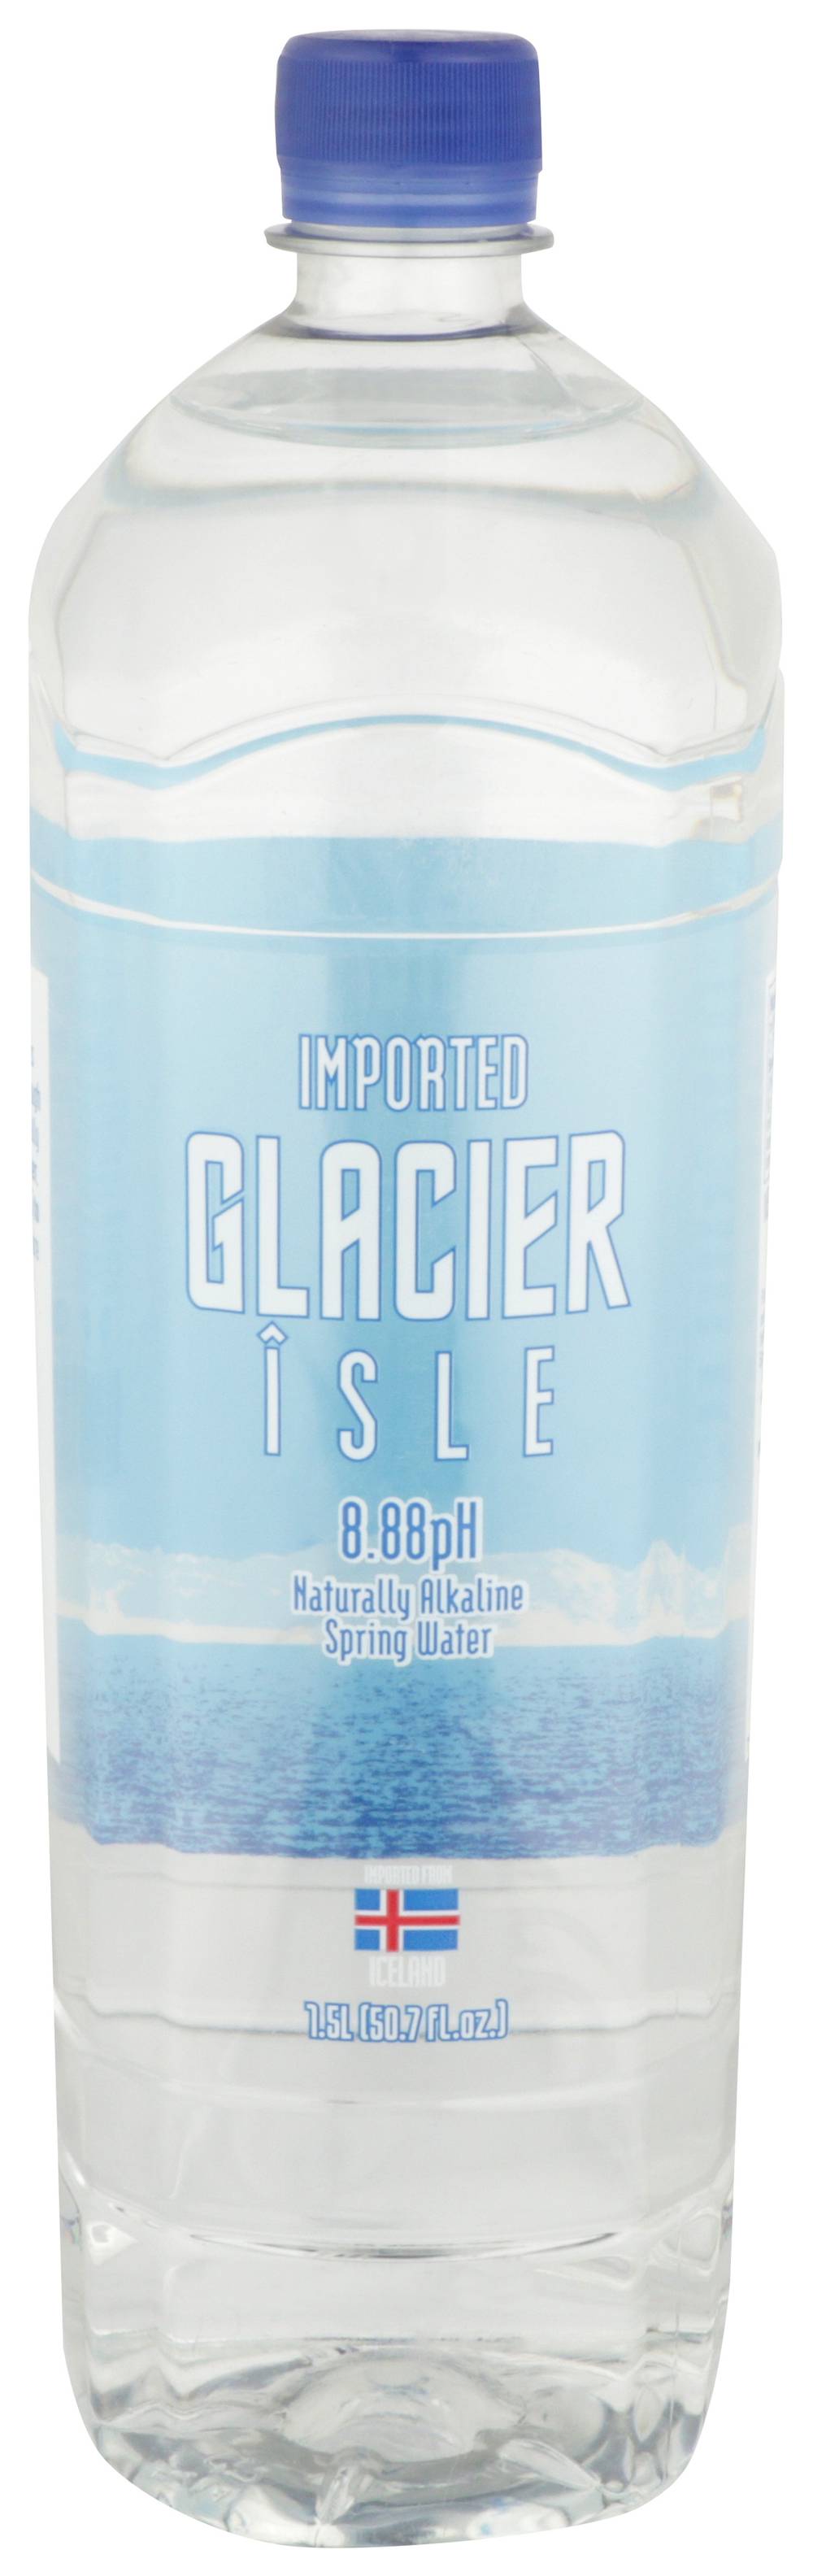 Glacier Isle Icelandic Water Bottle (50.7 oz)